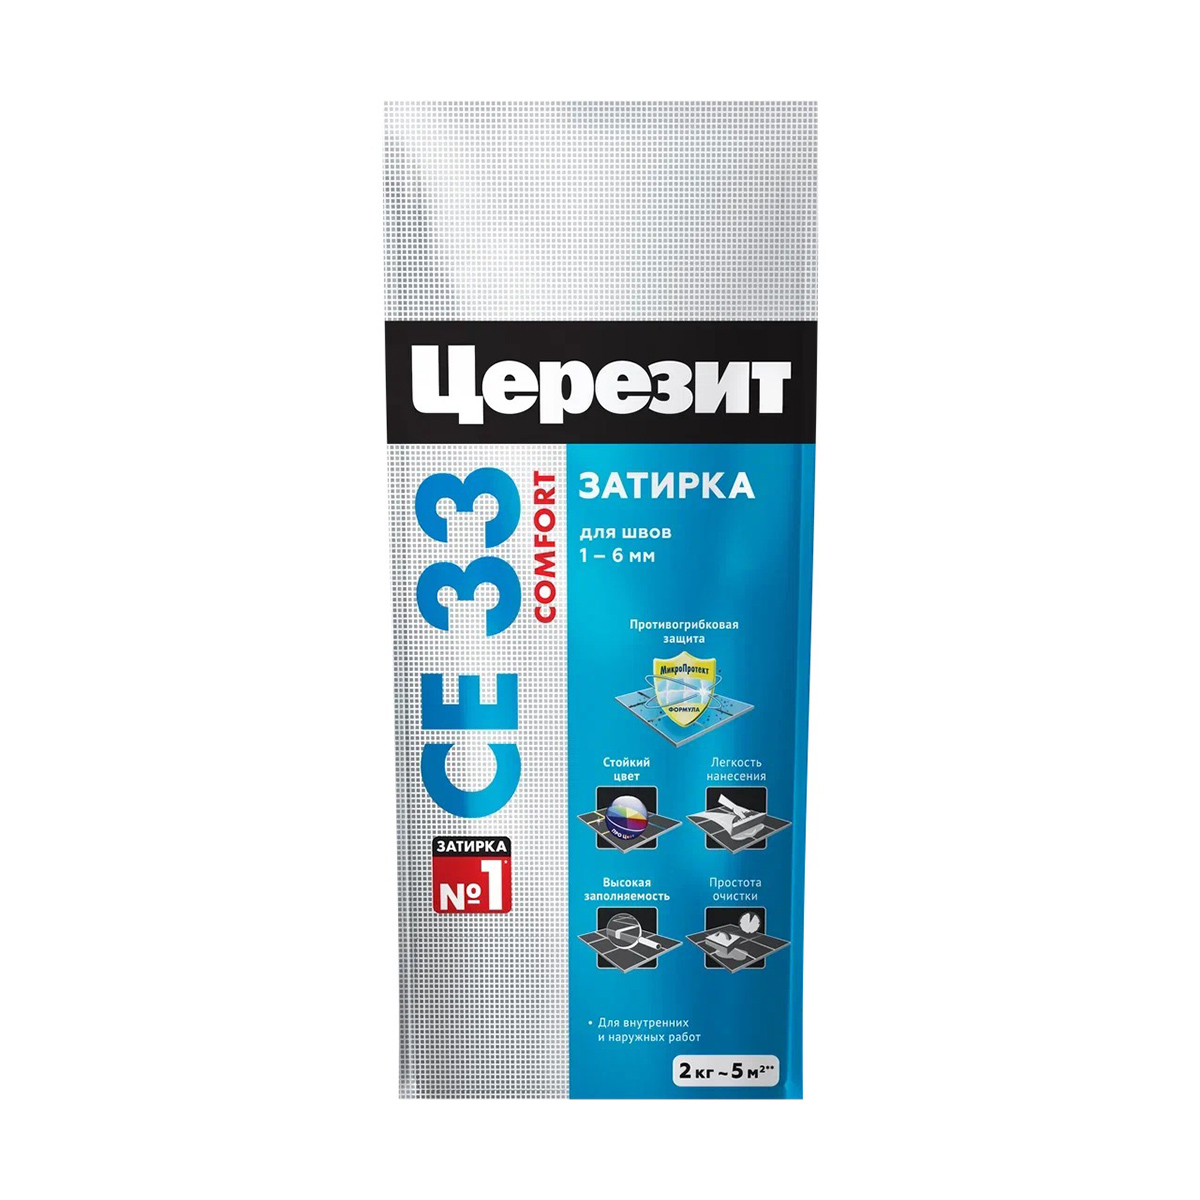 Затирка Церезит CE 33 Comfort №13, антрацит, 2 кг